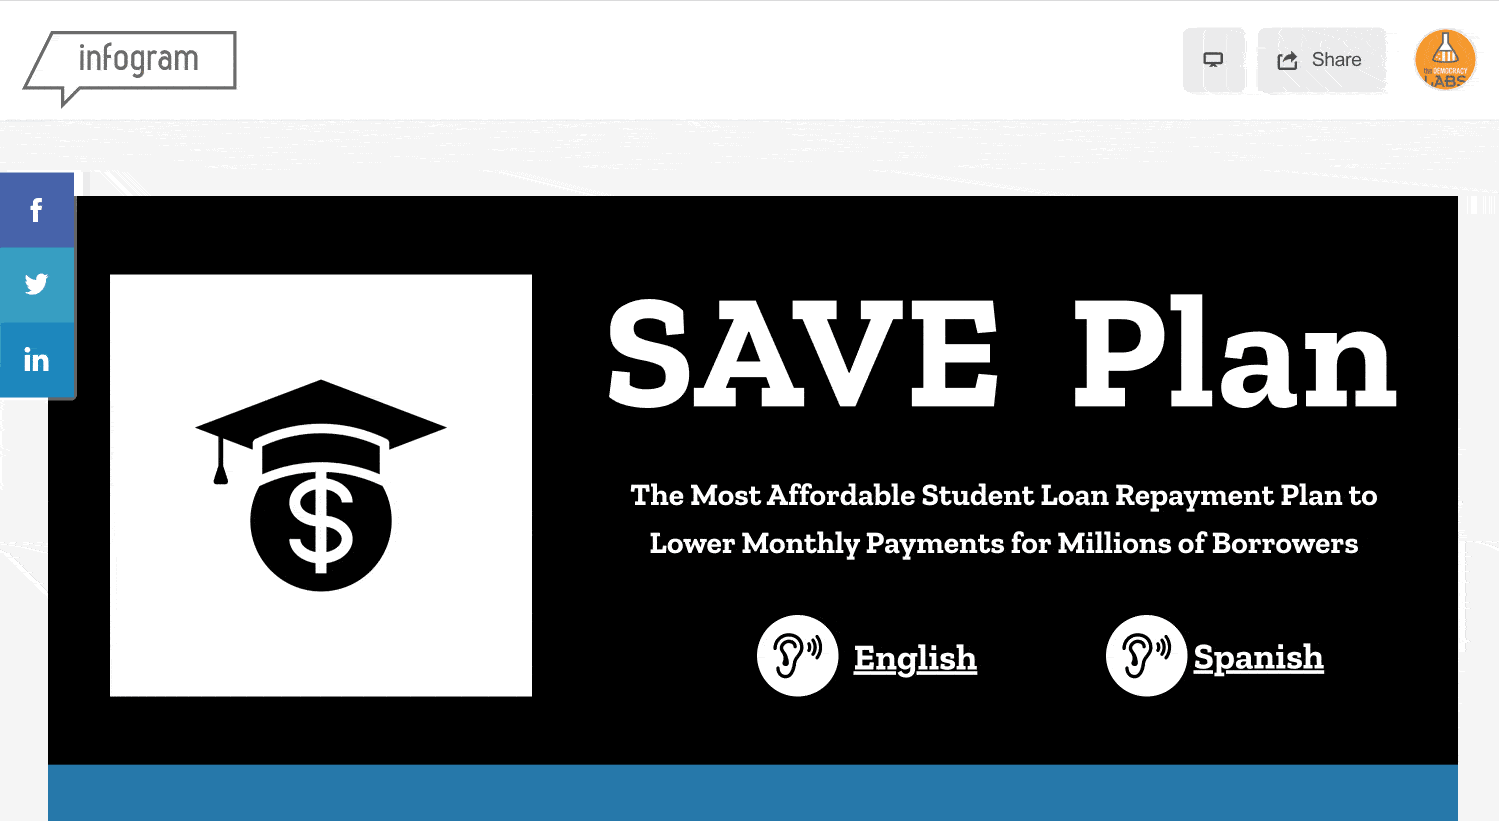 President Biden's SAVE program provides relief to struggling student borrowers